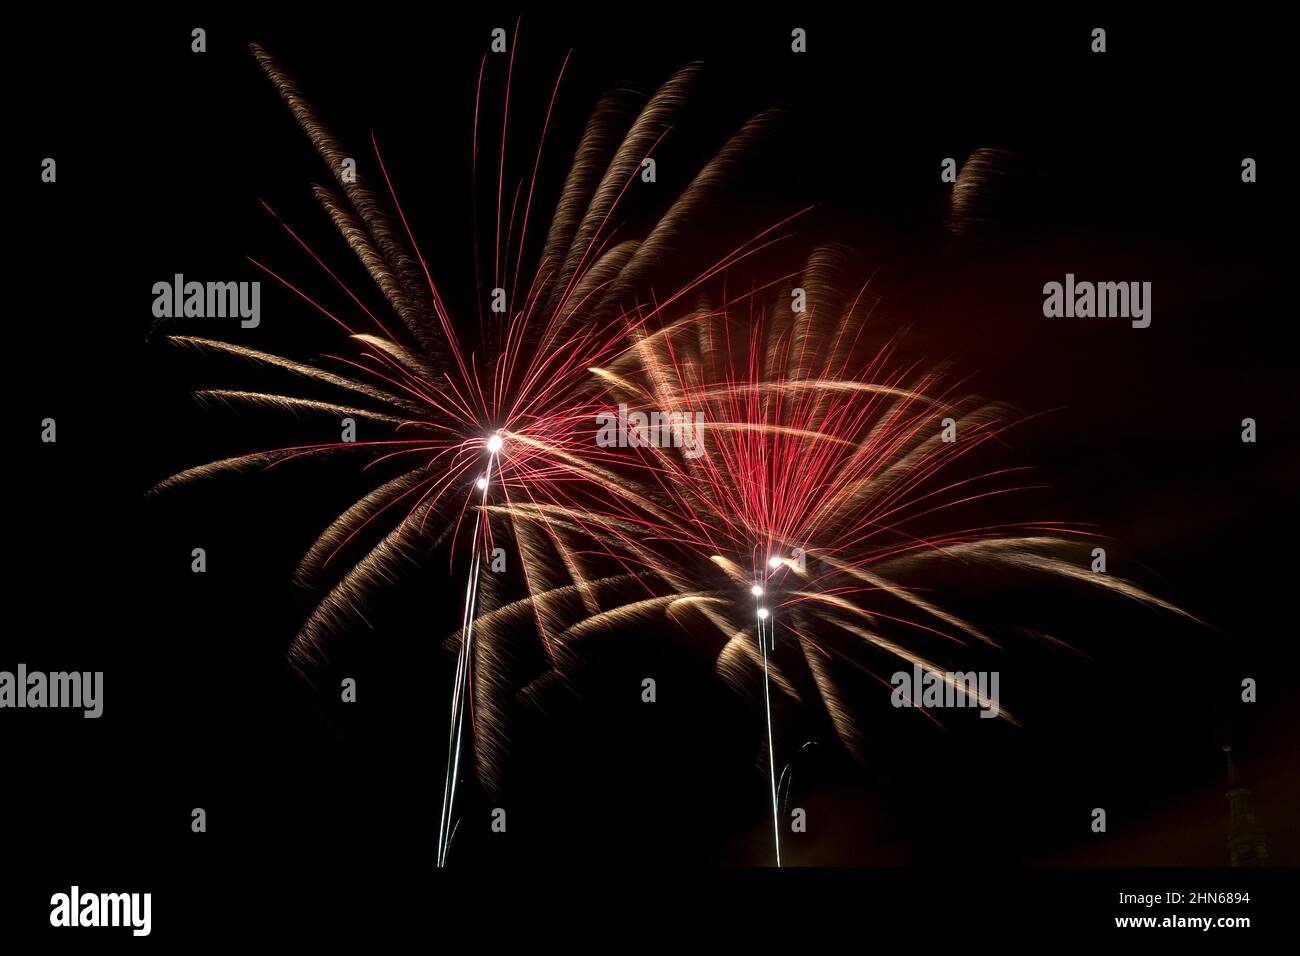 Fireworks isolated on dark background. Stock Photo